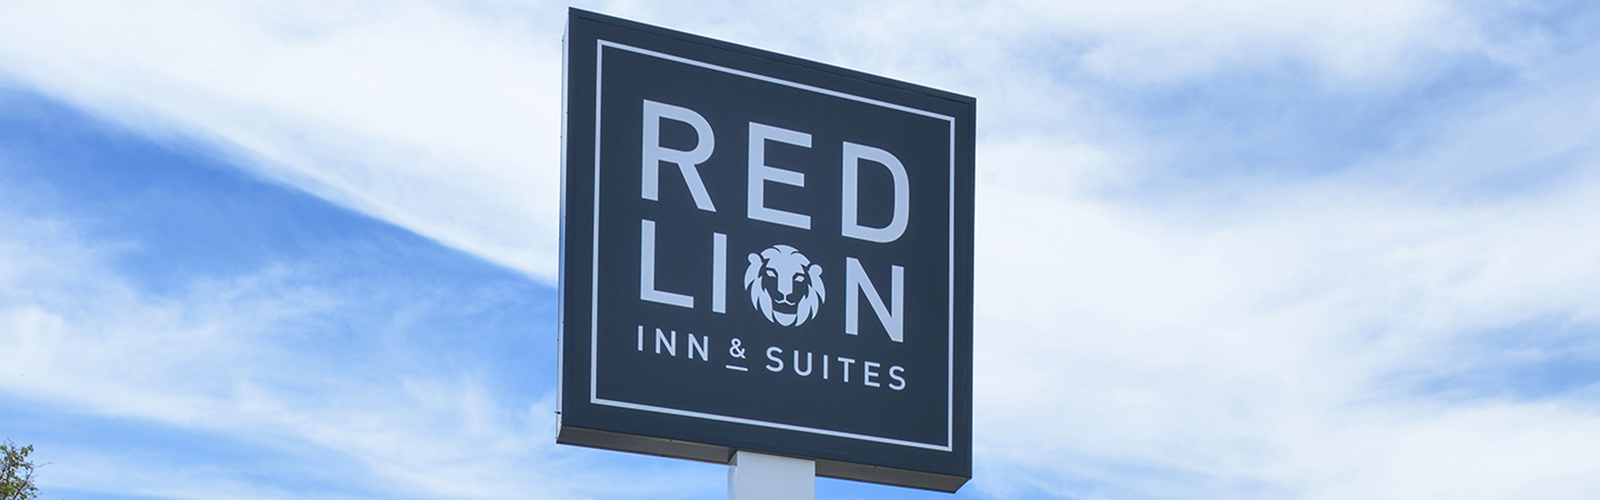 Red Lion Inn & Suites Signage